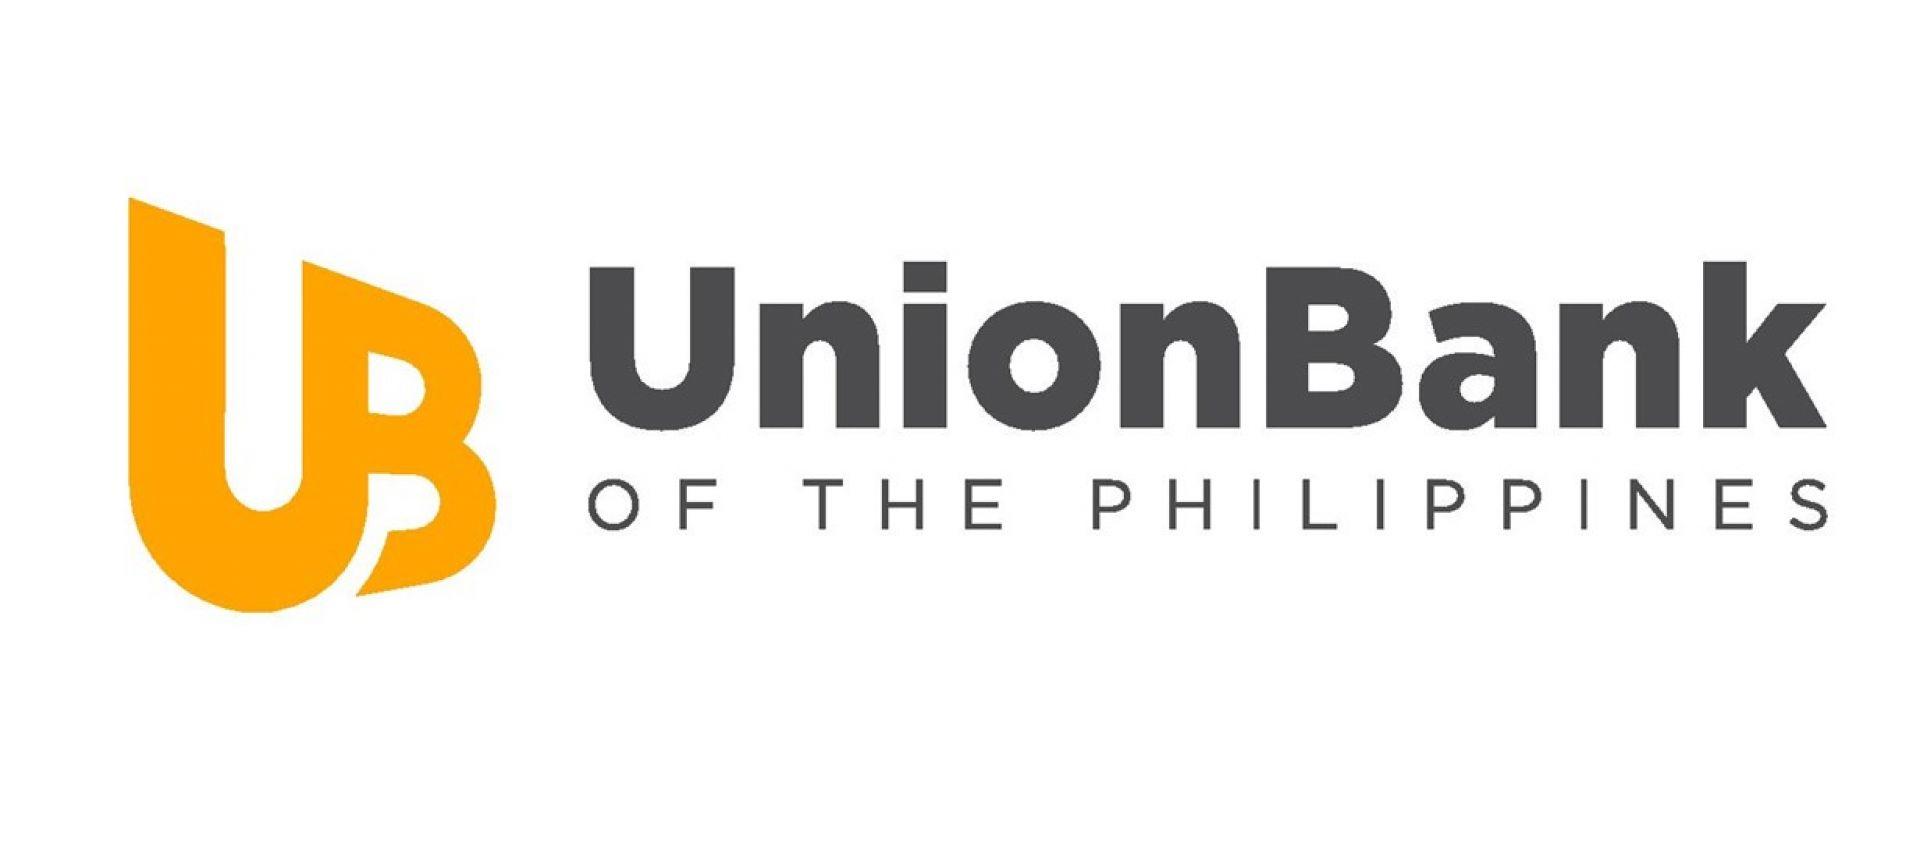 Union Bank Logo - Digital Asset Custody Operations